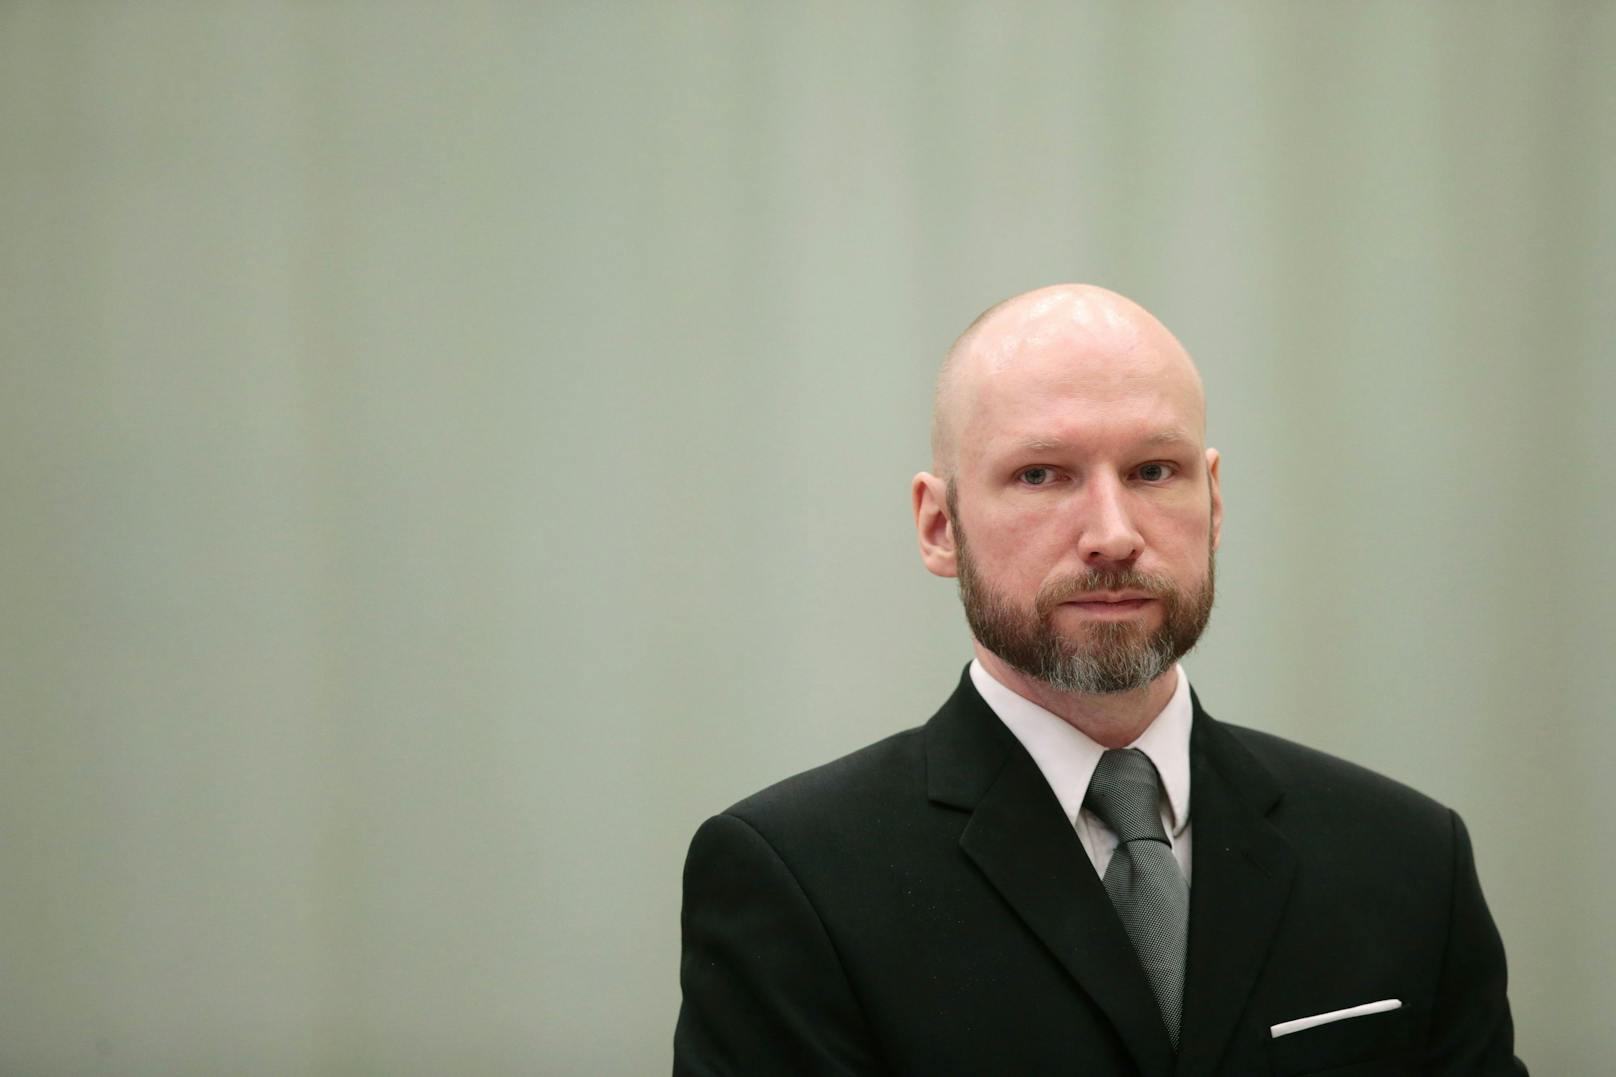 Massenmörder Breivik könnte auf Bewährung freikommen